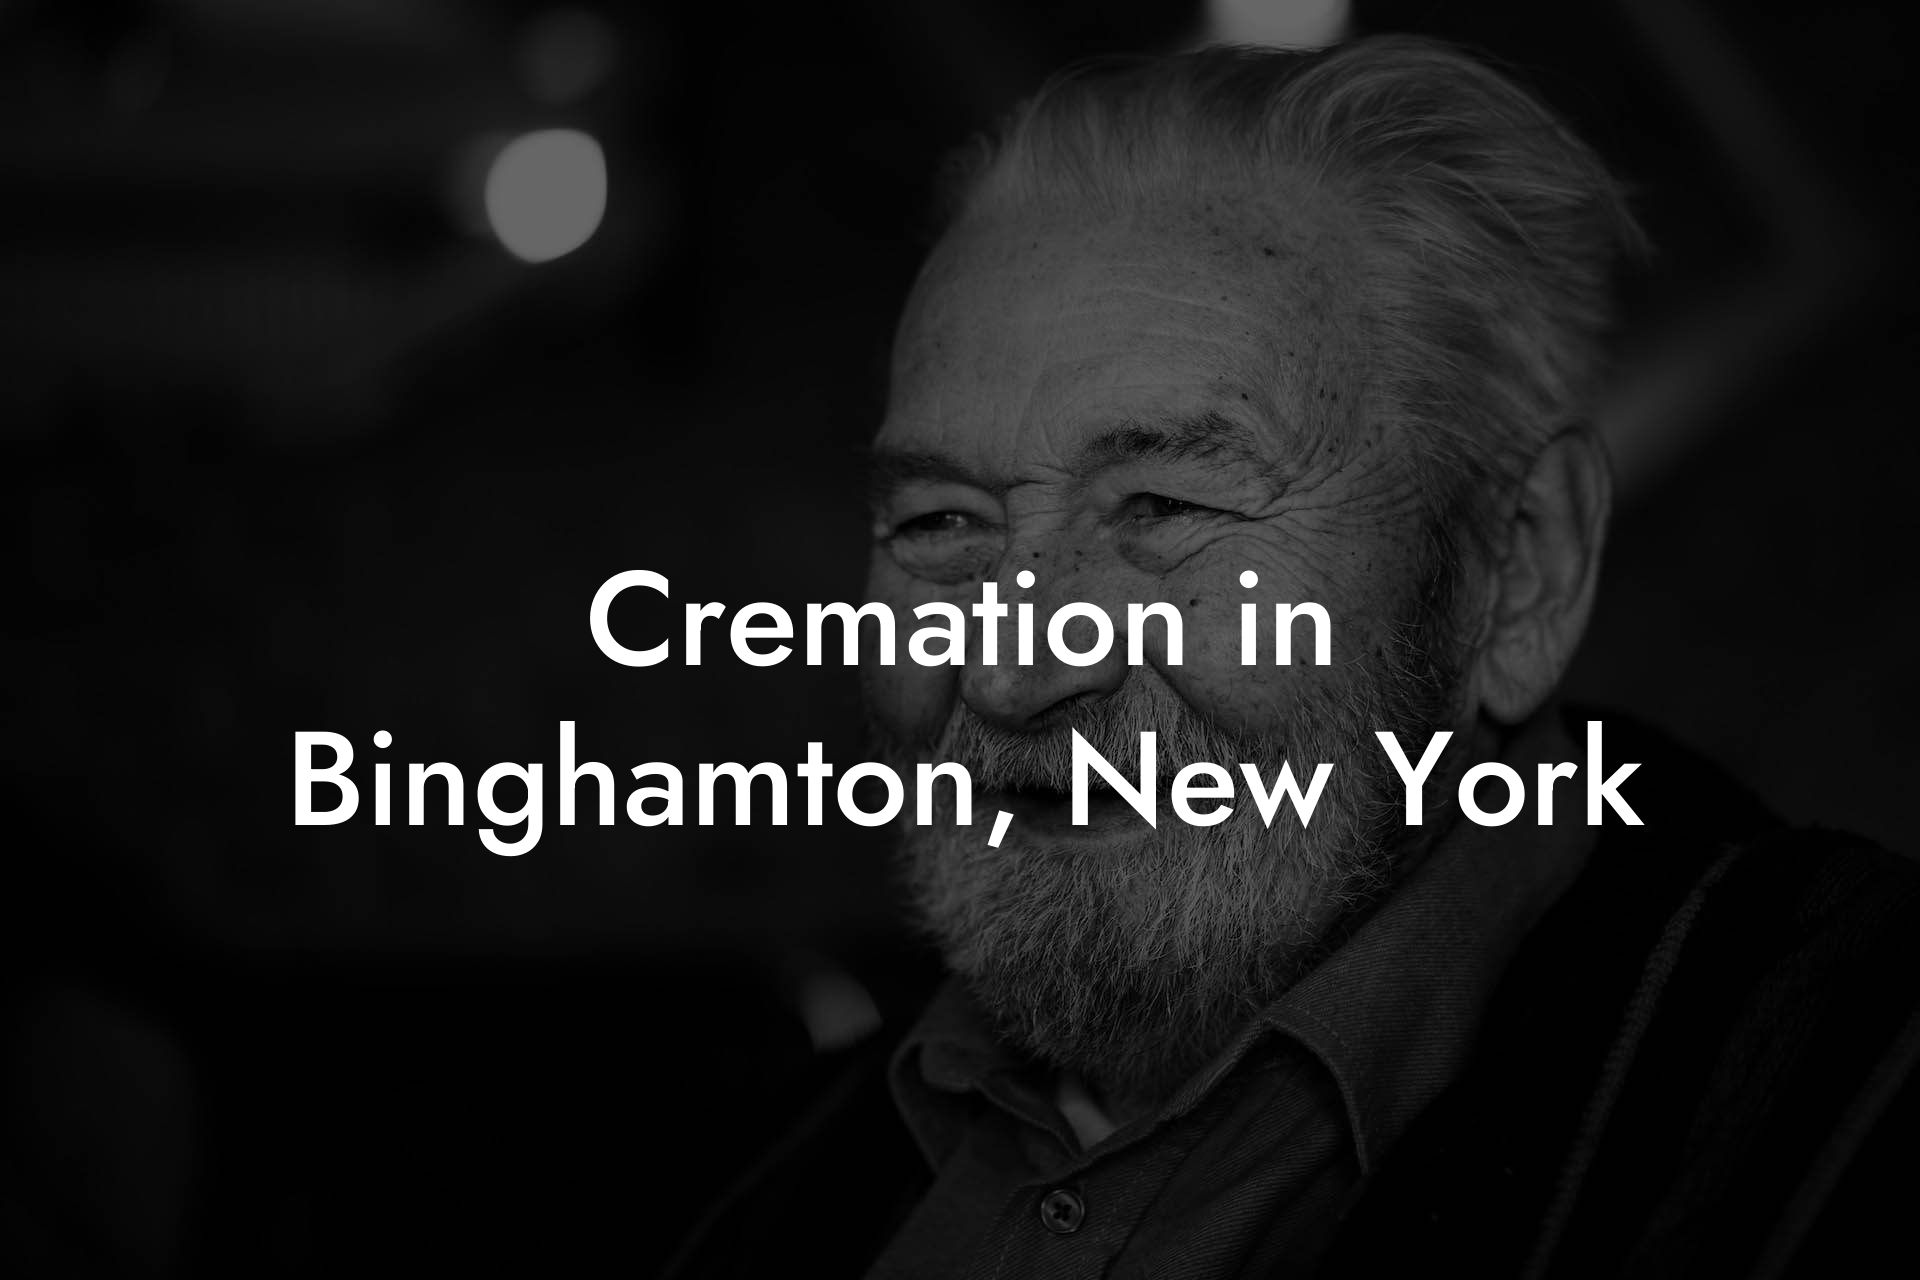 Cremation in Binghamton, New York